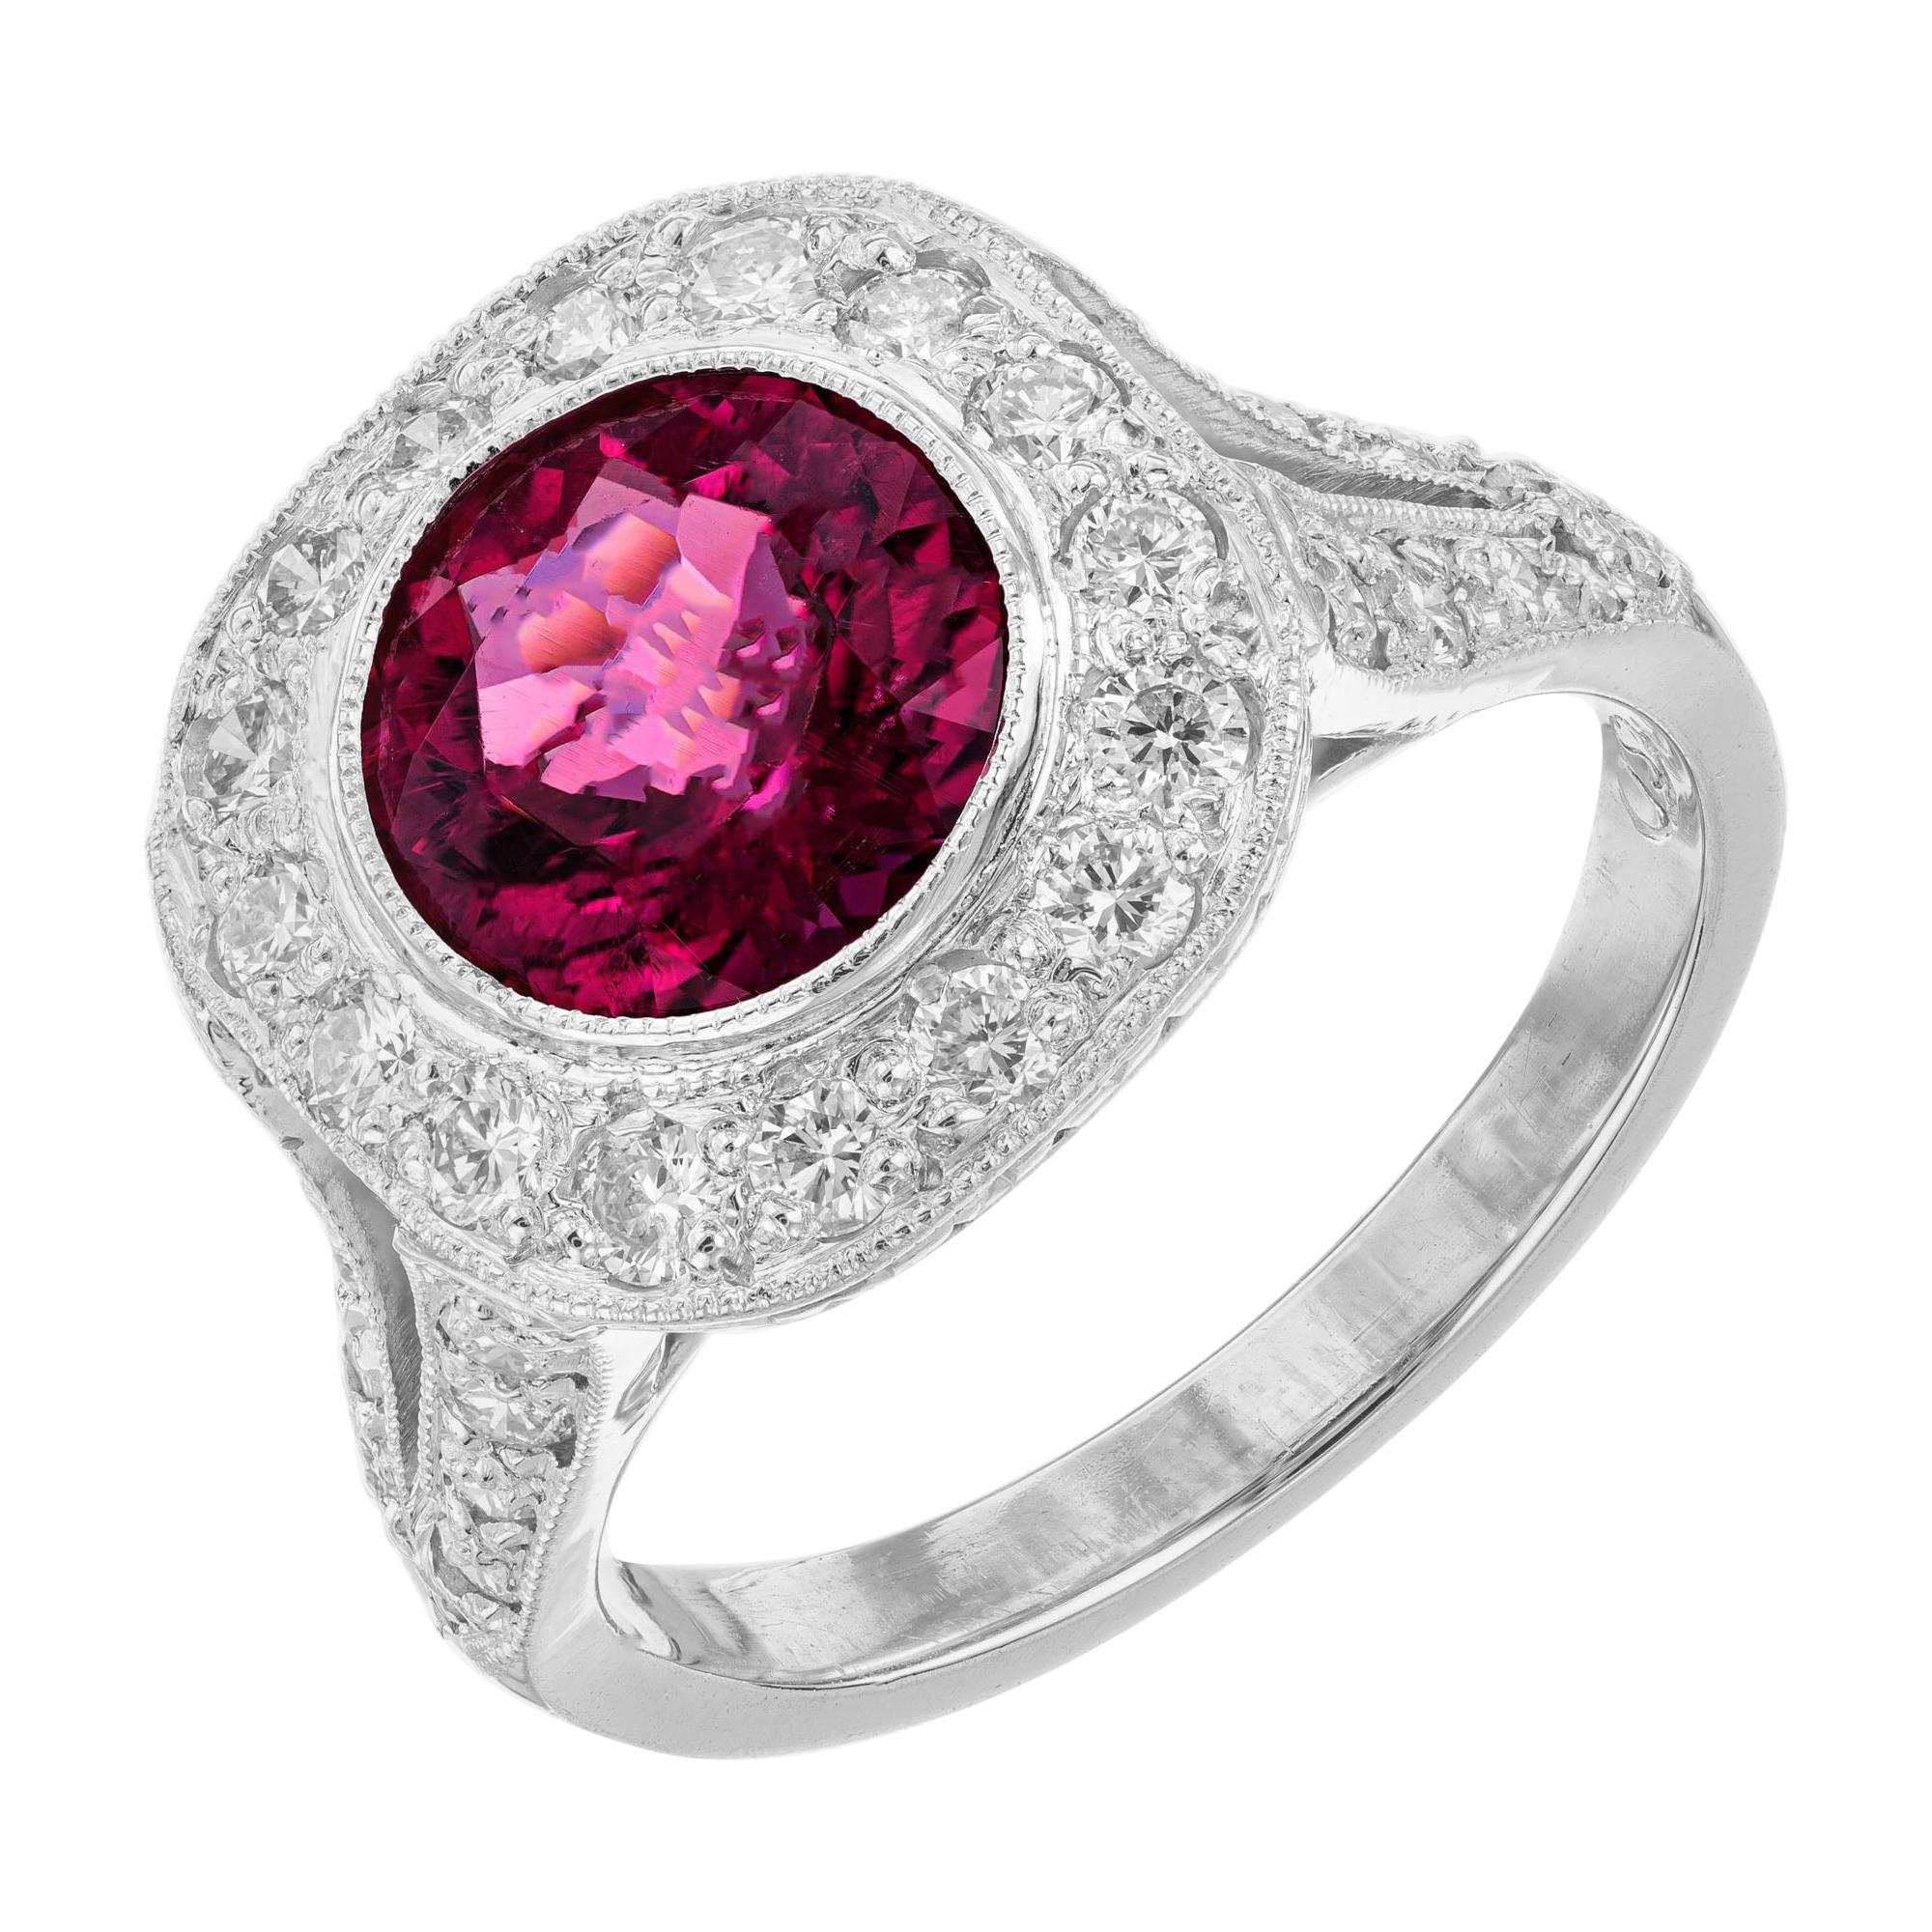 Platin-Verlobungsring mit 2,20 Karat rosa rotem Rubellit, Turmalin, Diamant und Halo